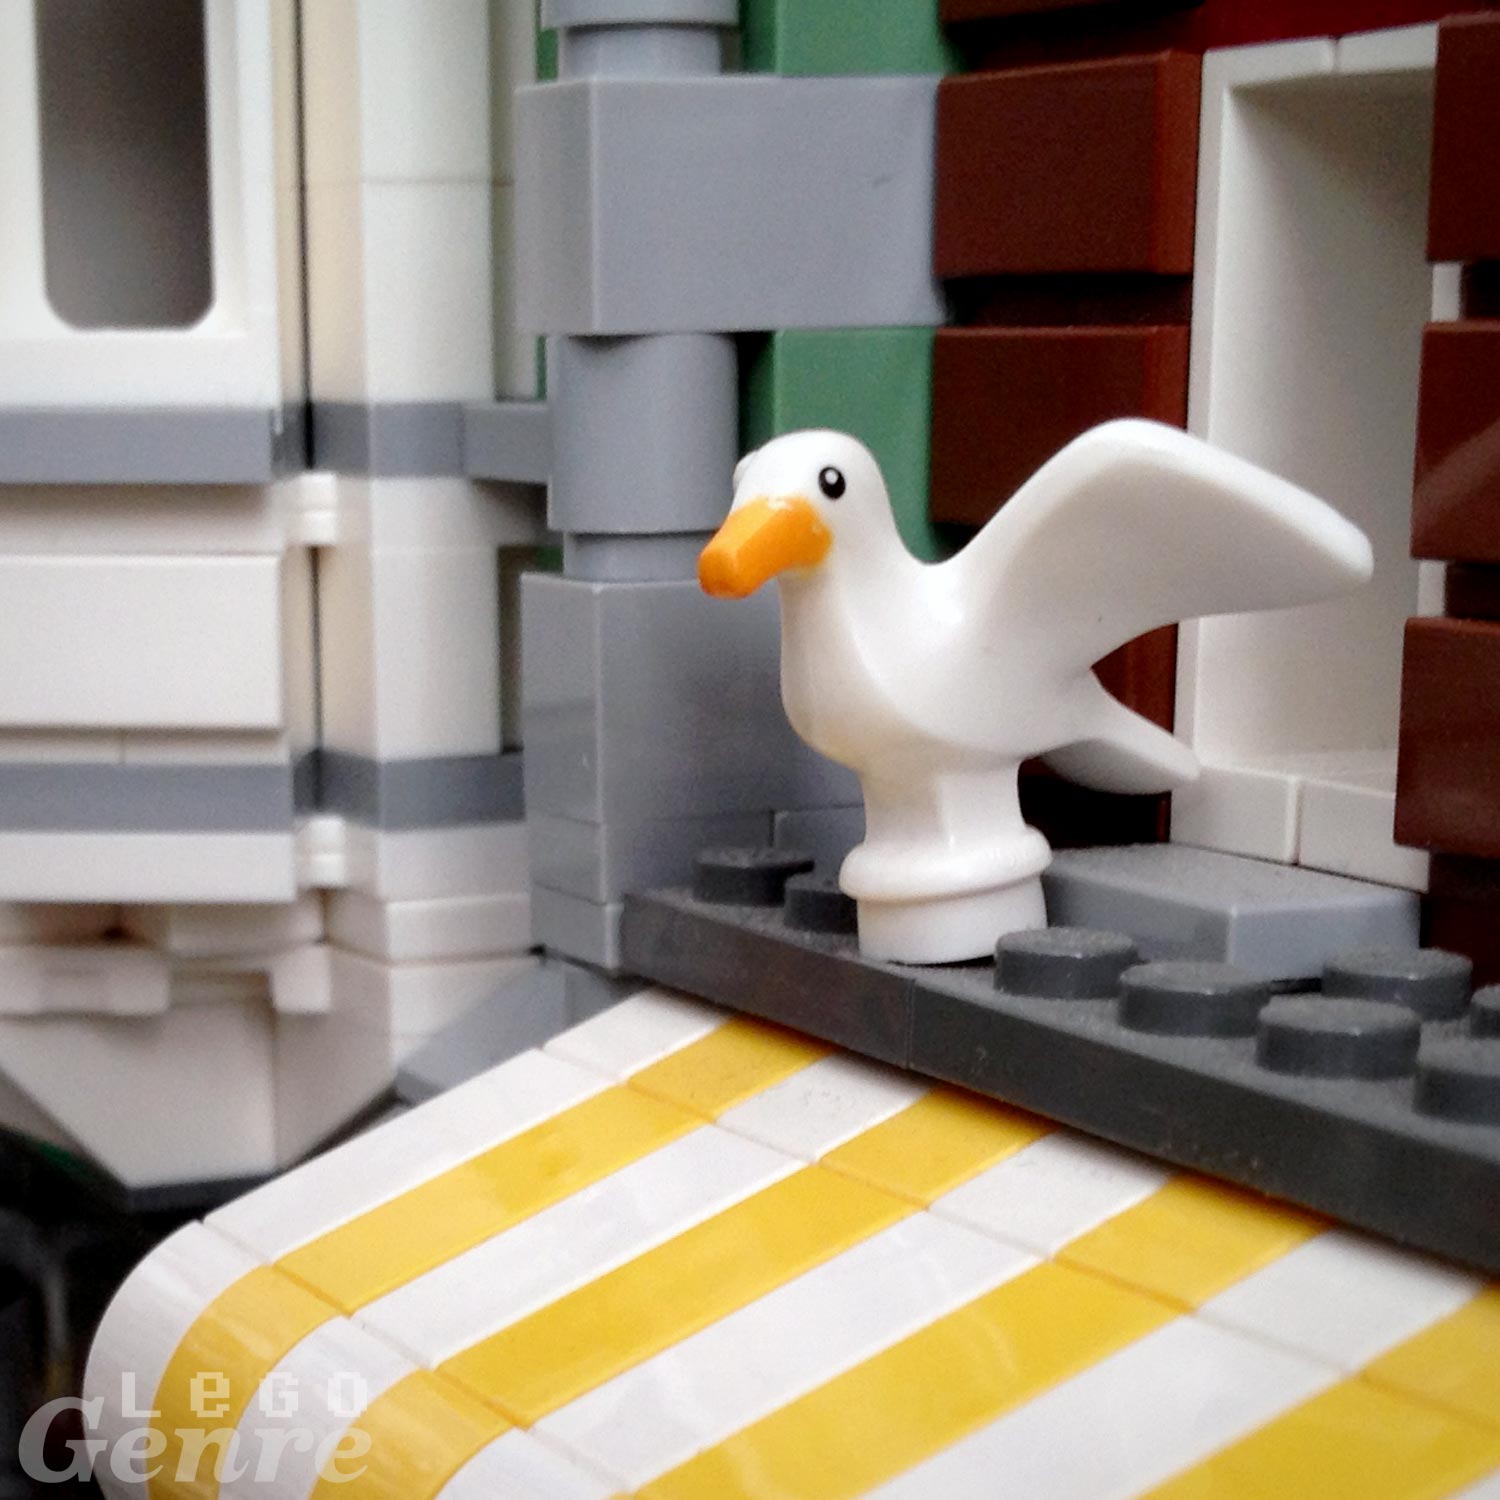 LegoGenre 00335: Seagull Sunday